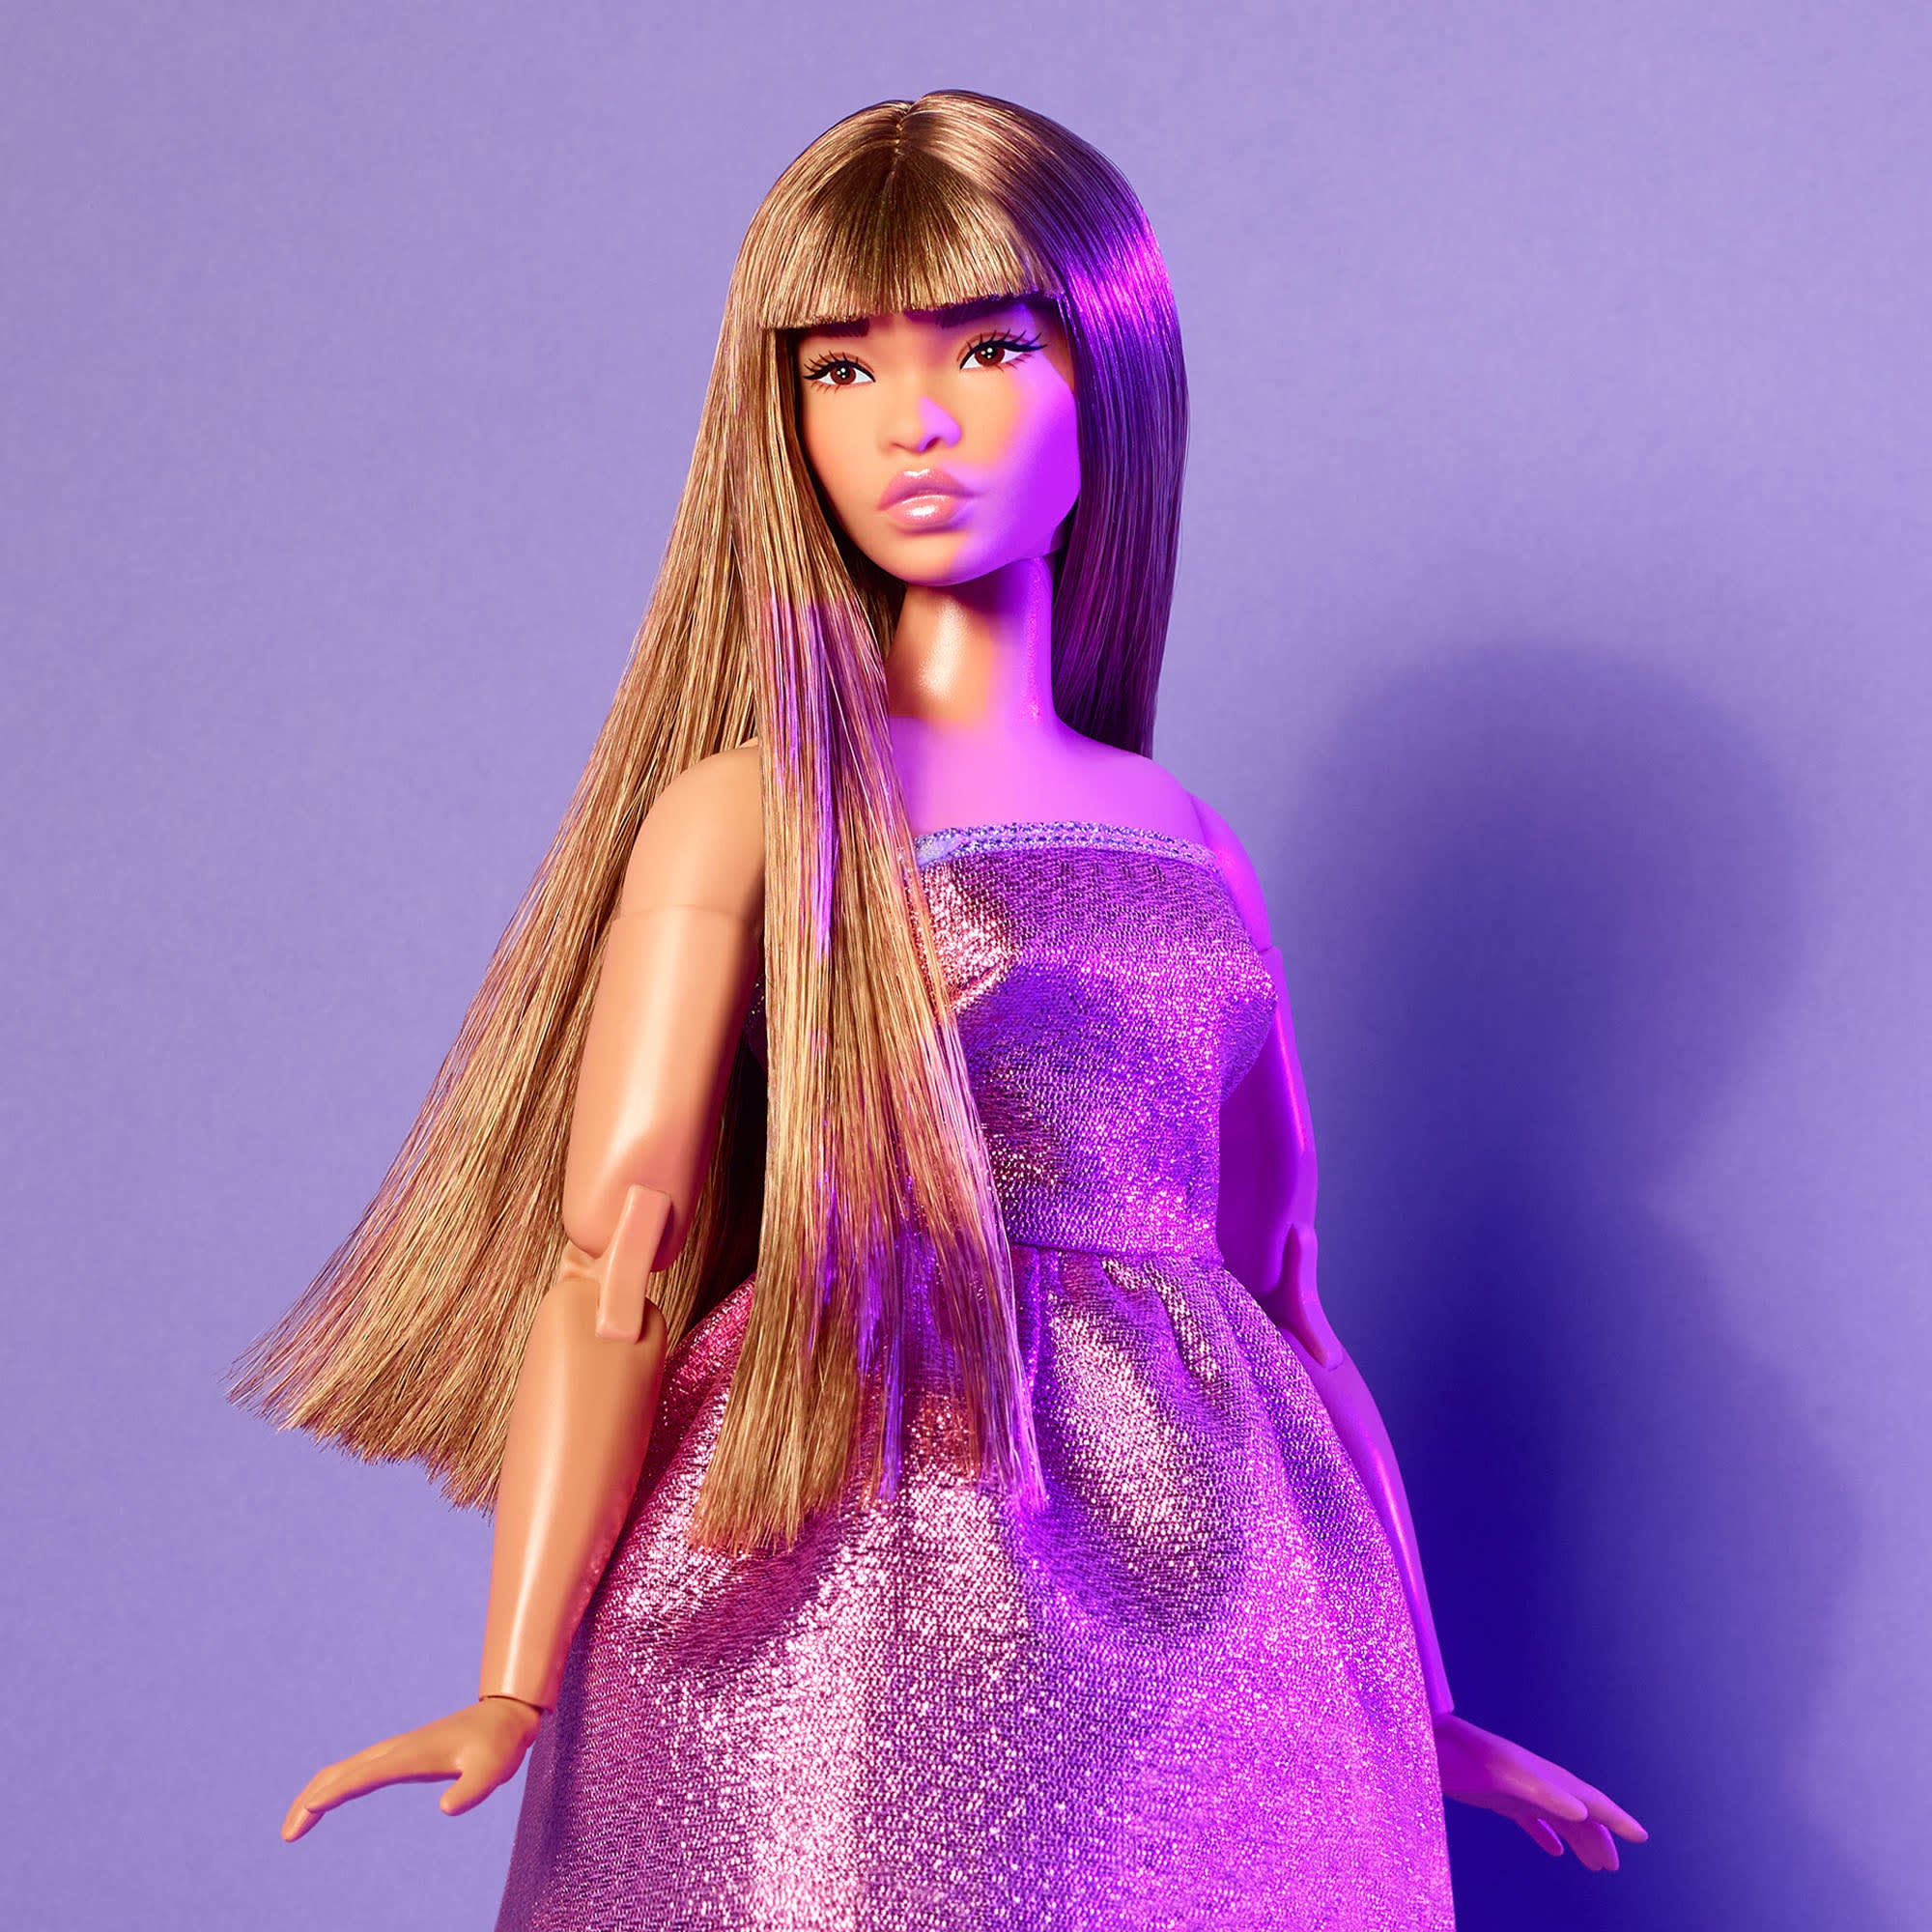 Barbie Looks Doll #24 (Curvy, Long Brown Hair)